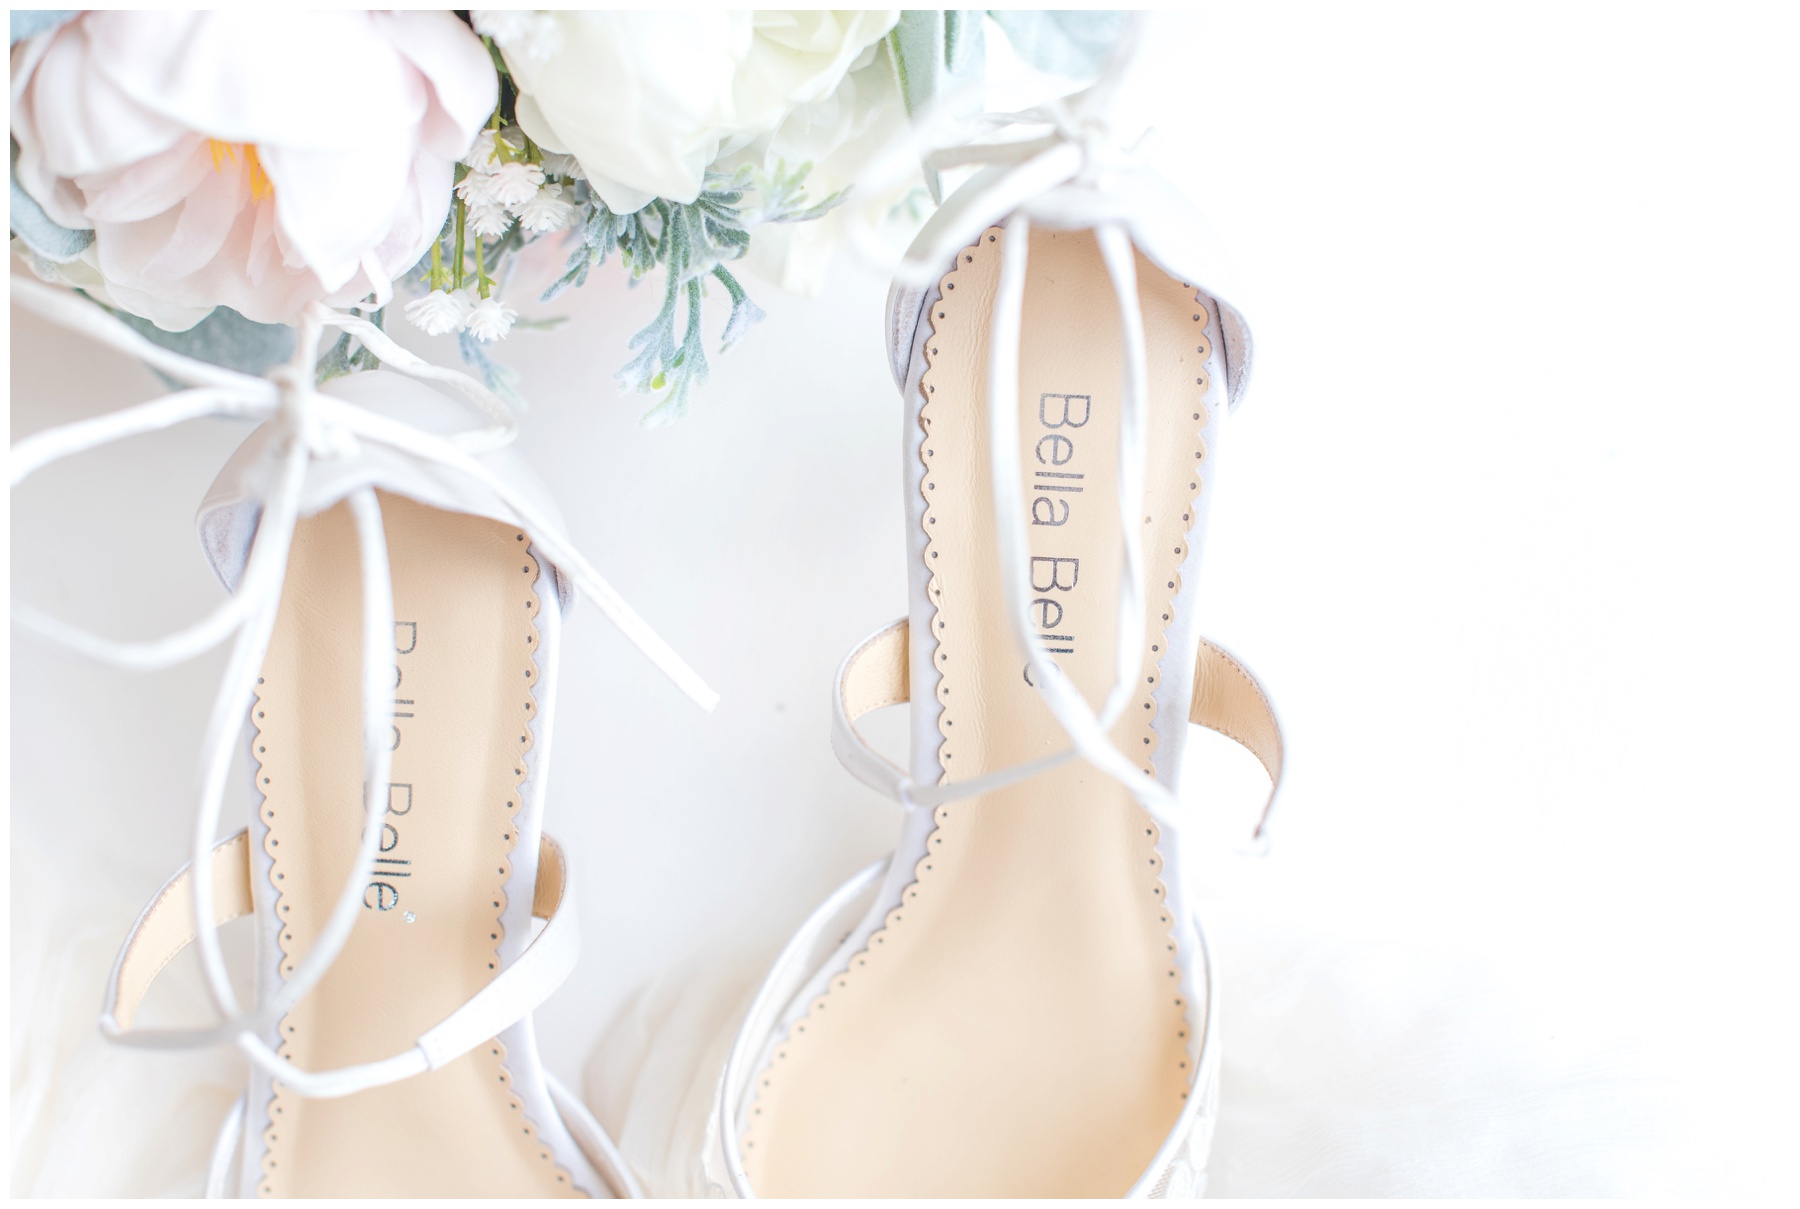 Bella Belle Wedding Shoes